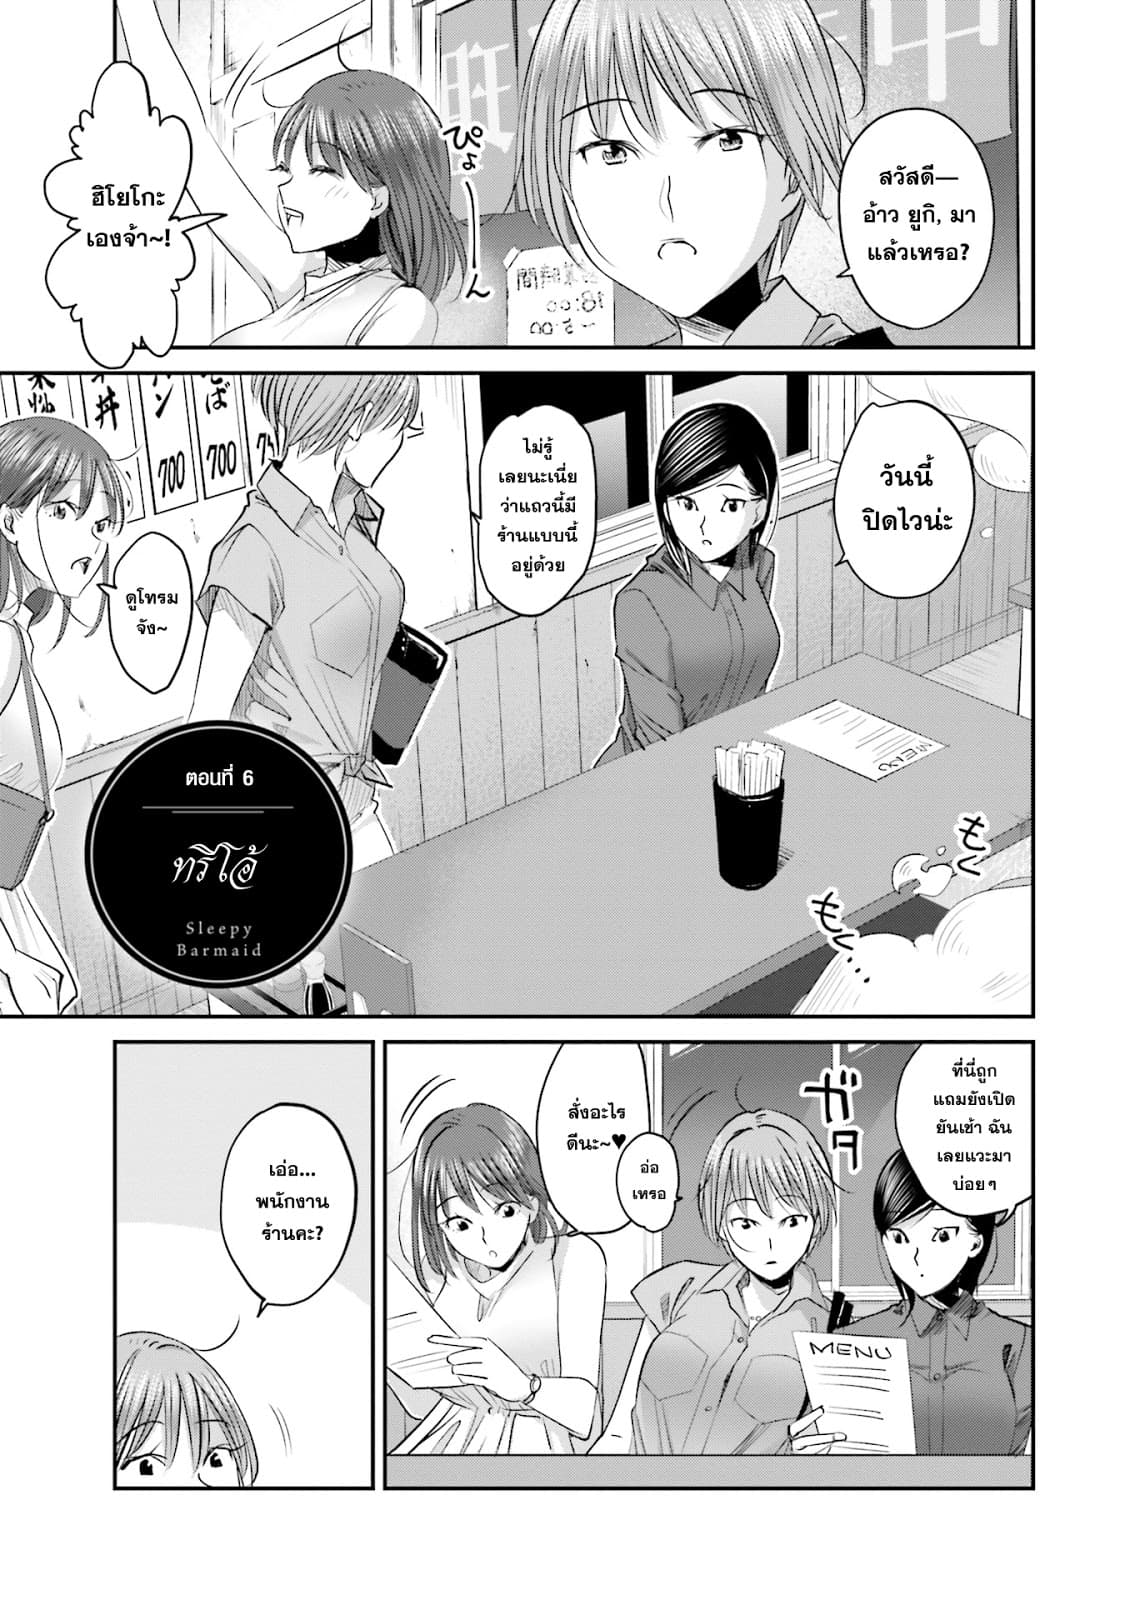 Sleepy Barmaid บาร์เทนเดอร์สาวขี้เซา ตอนที่ 6 - Inu Manga อ่านมังงะ